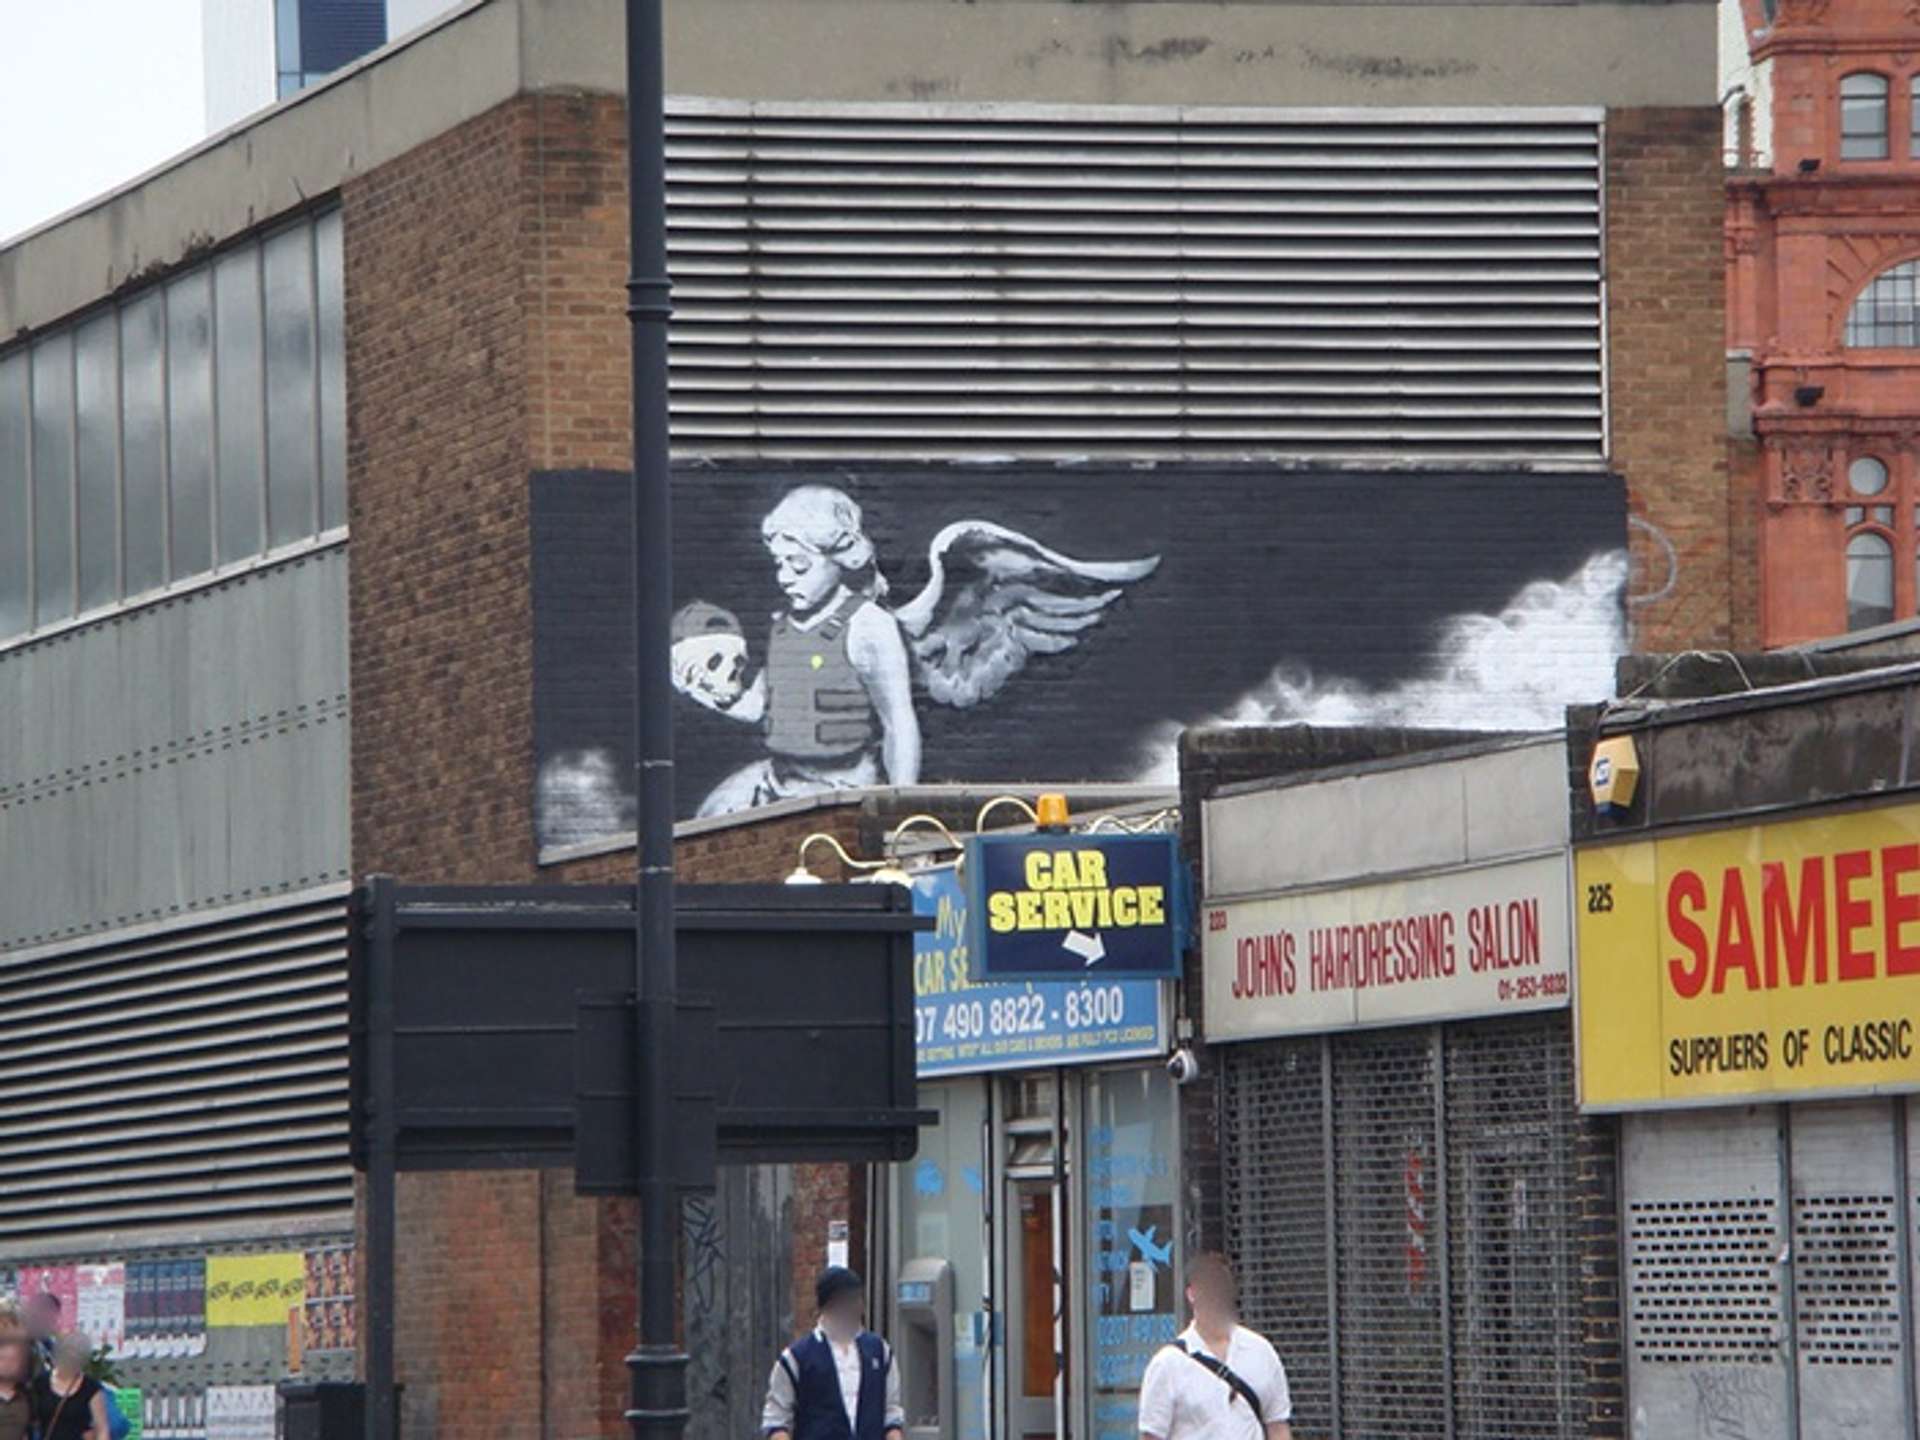 OZONE's Angel by Banksy